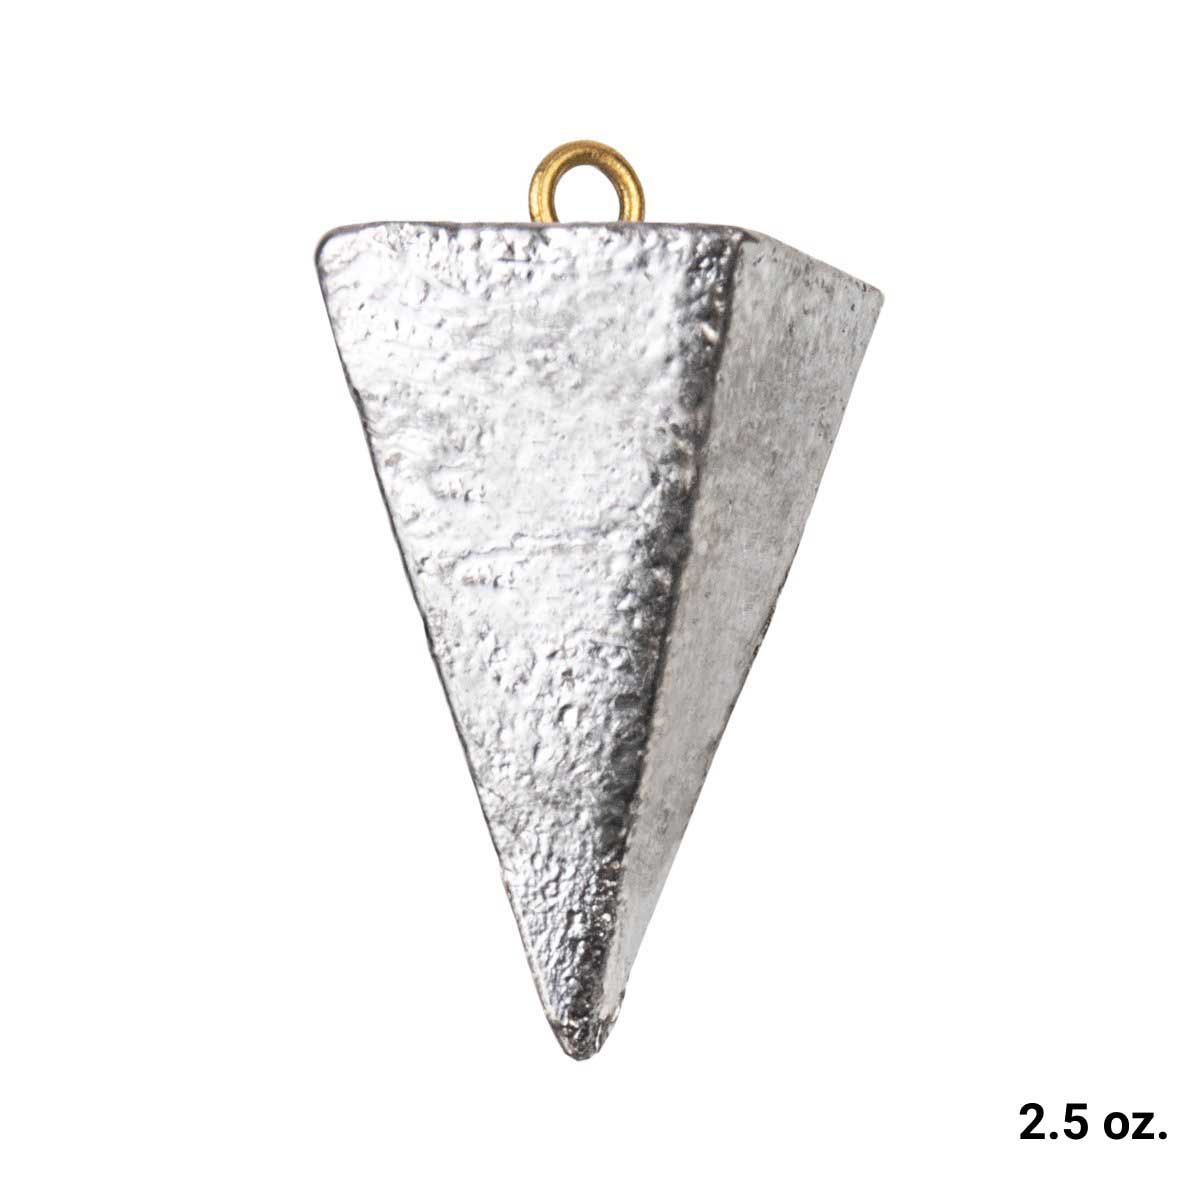 Pyramid Sinker Lead Fishing Weights 1 oz, 1.5 oz, 2 oz, 2.5 oz, 3 oz